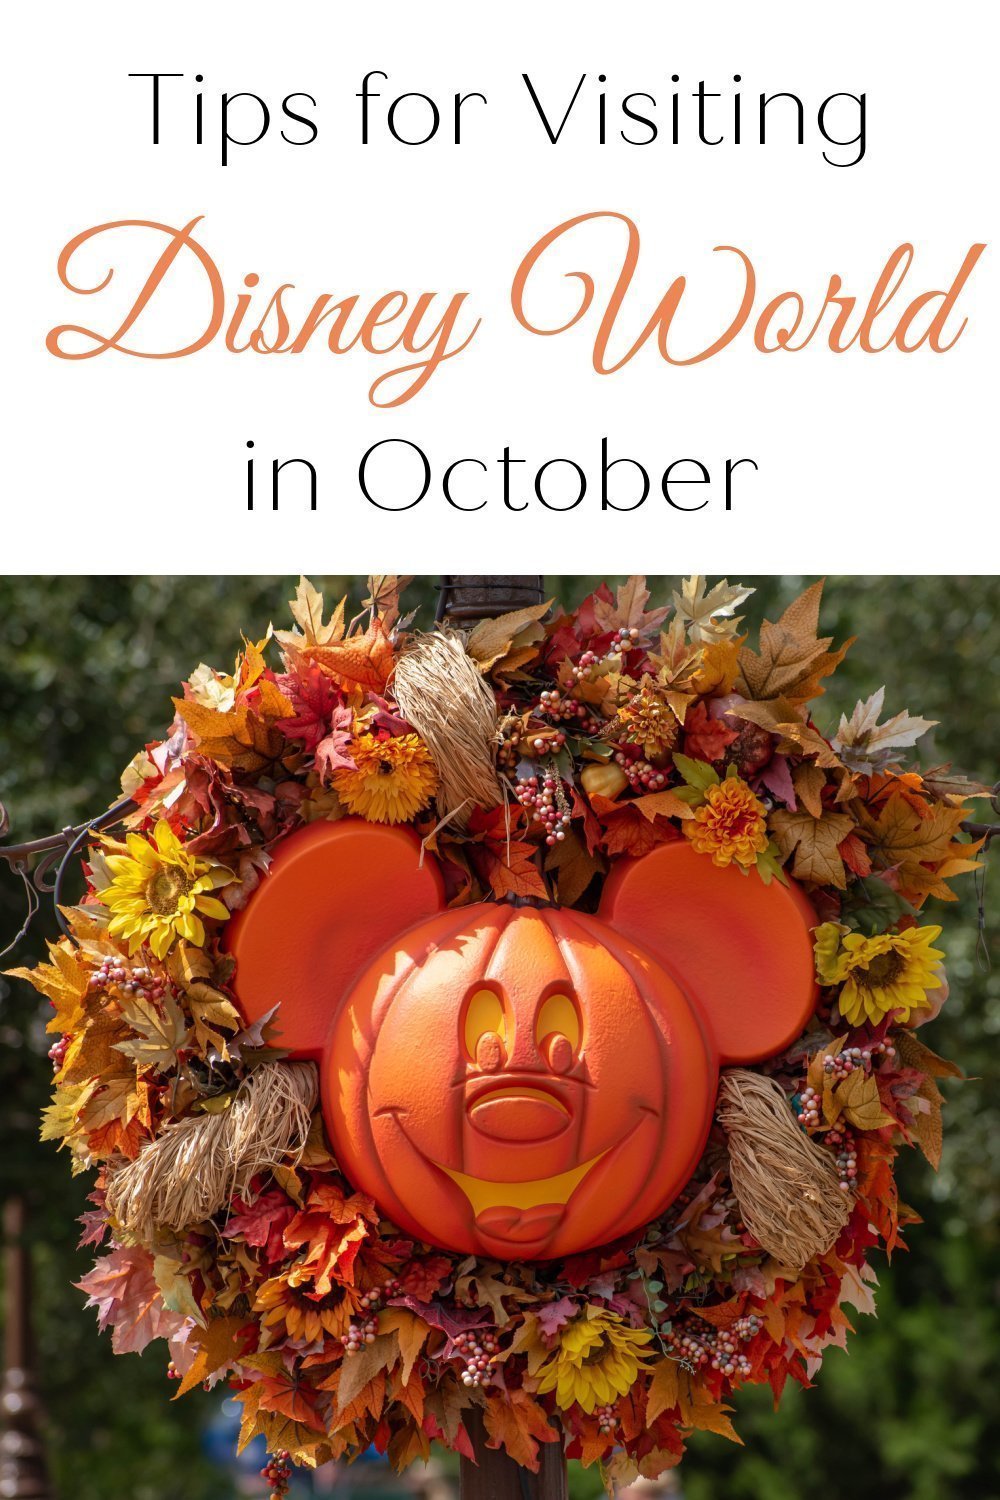 Tips for Visiting Disney World in October